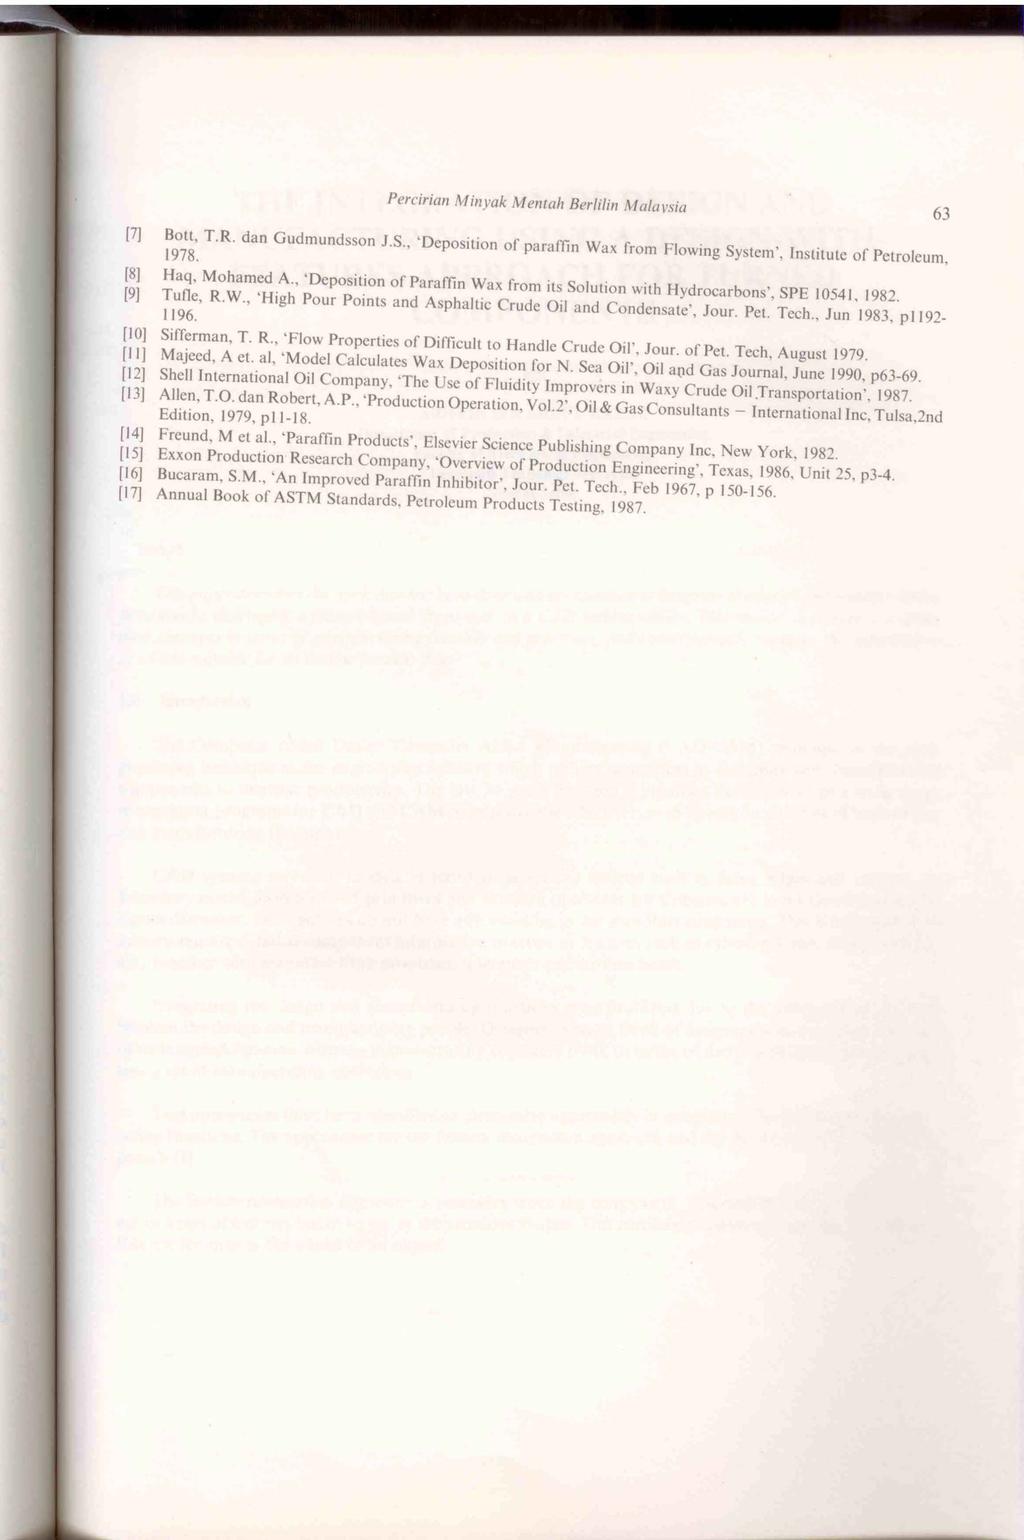 Perciria11 Minyak Me11tah Ber/ilin Mala1 sia [7] Bott, T.R. dan Gudmunds on J.S., 'Depo ition of paraffin Wax from Flowing Sy tern', In titute of Petroleum, 1978. (8] Haq, Mohamed A.